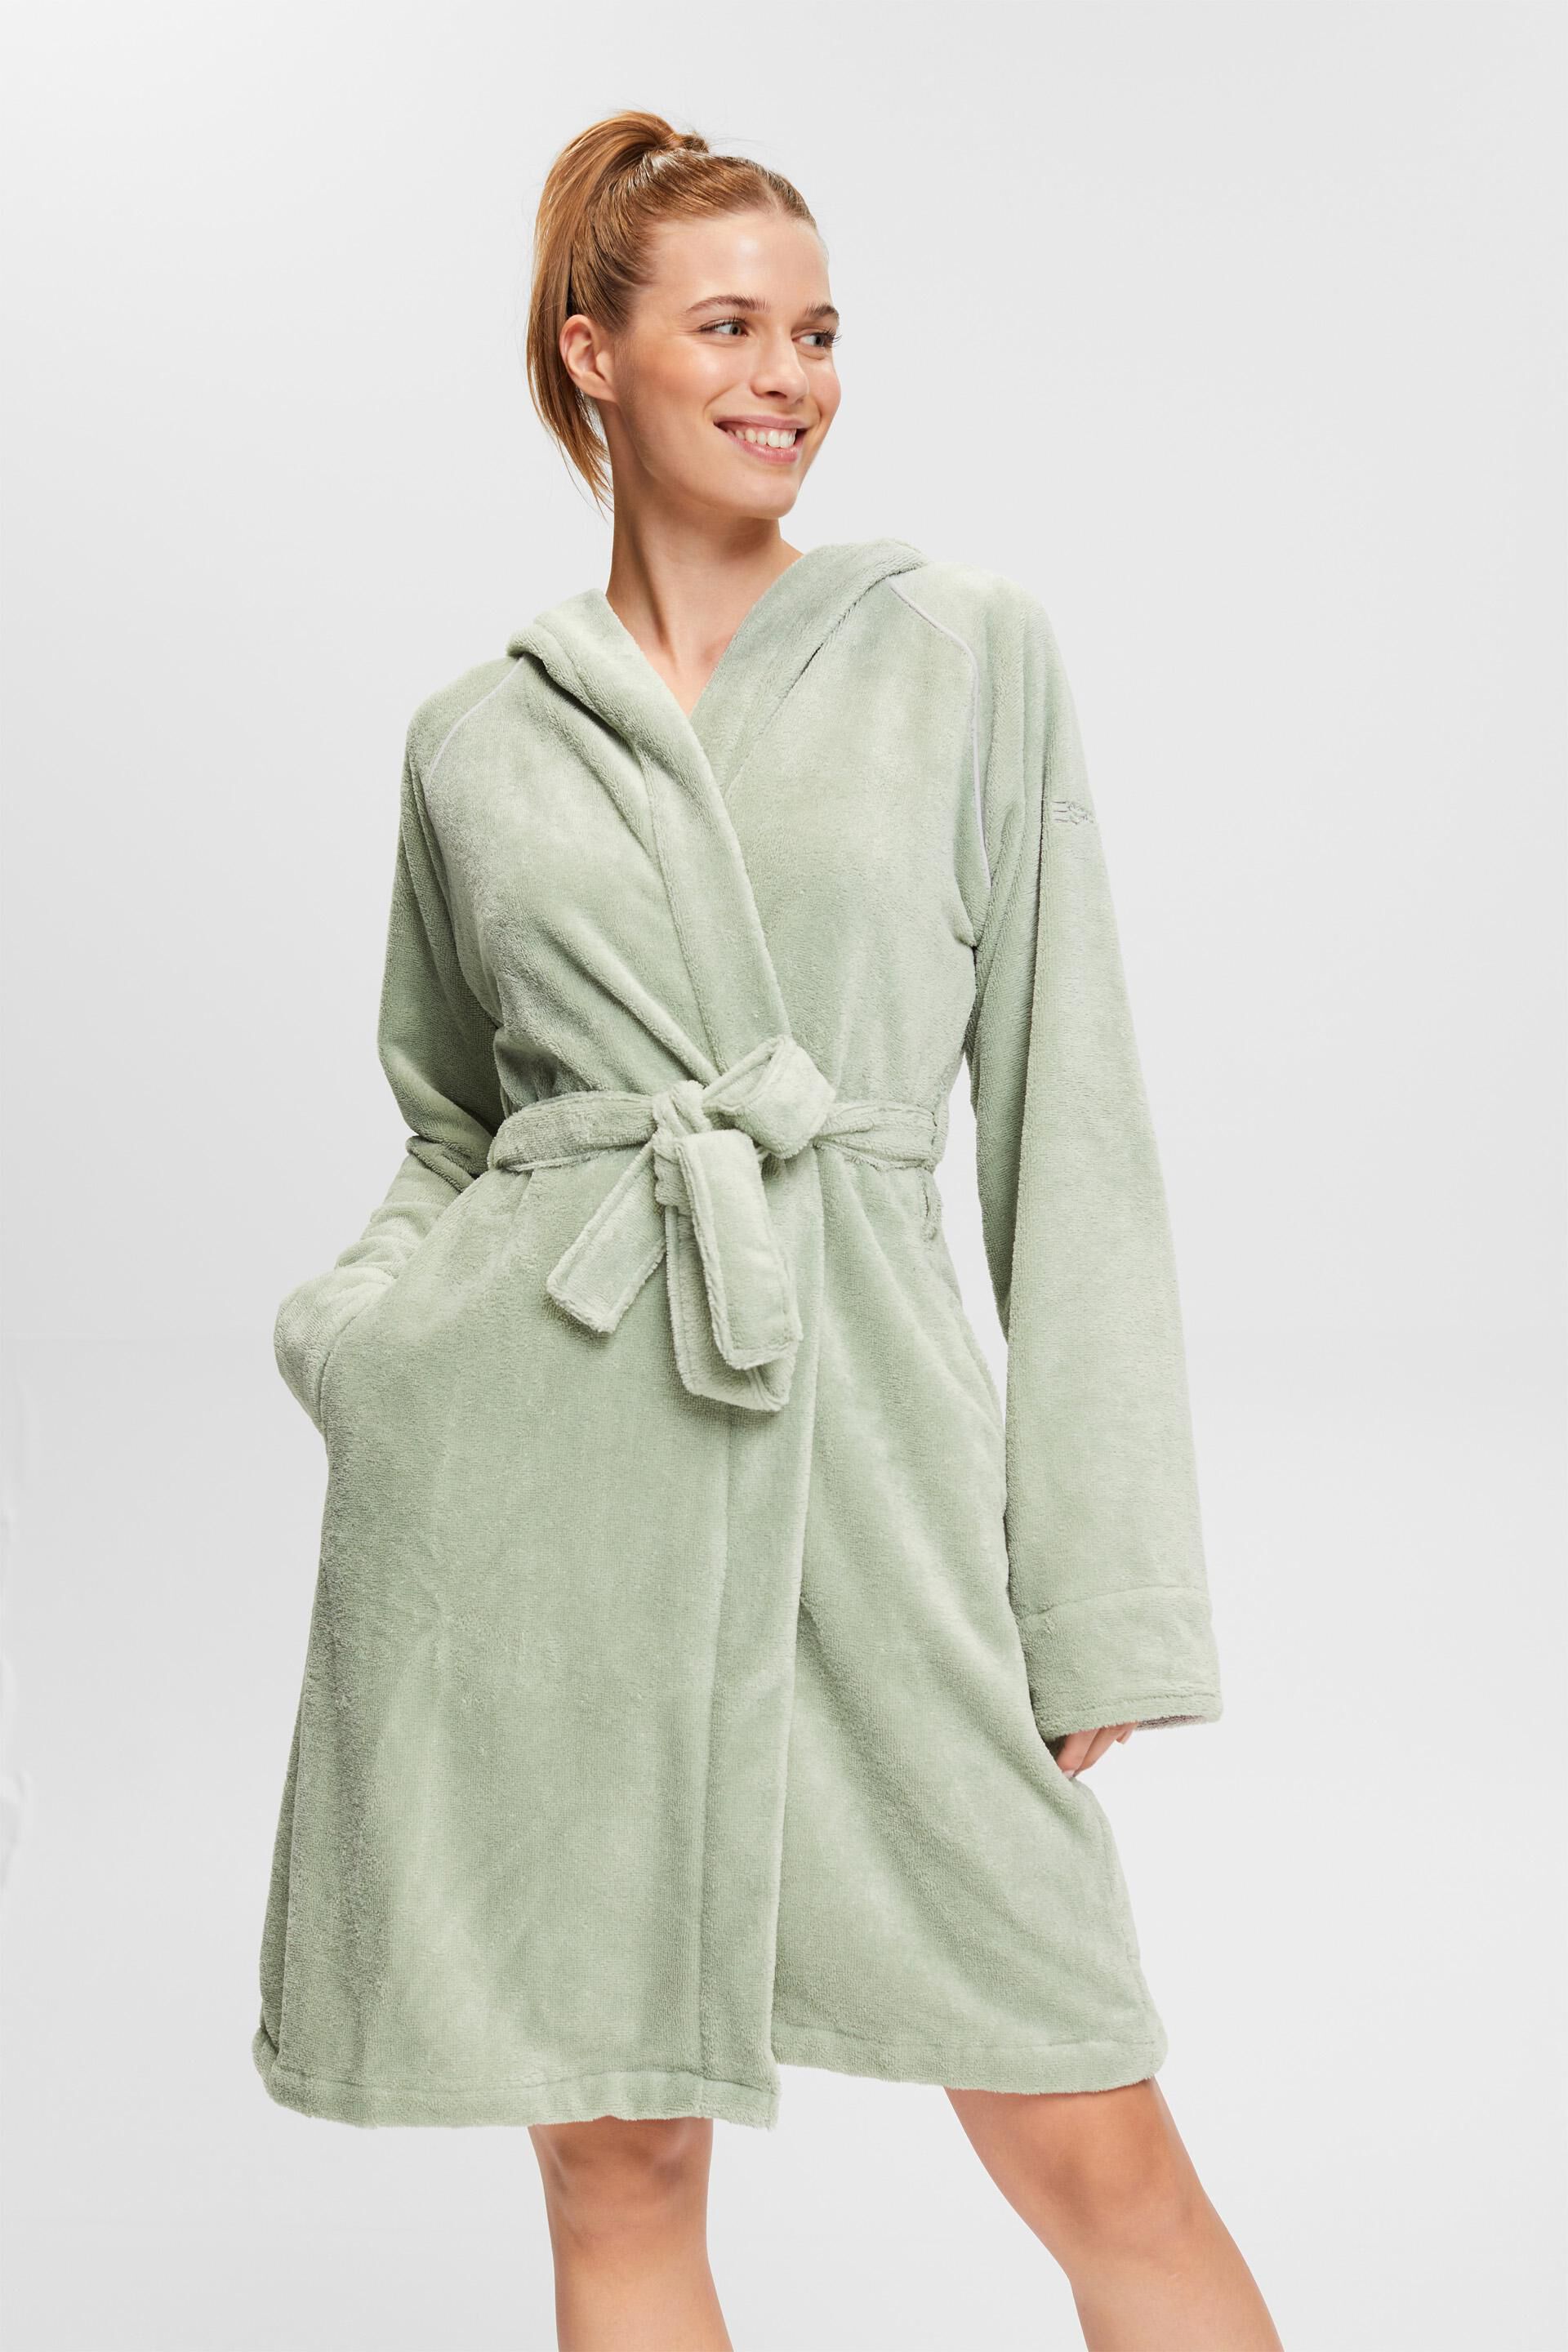 IUEG Ladies Terry Towelling Zip Through Bathrobe 100% Cotton Dressing Gown.  | eBay